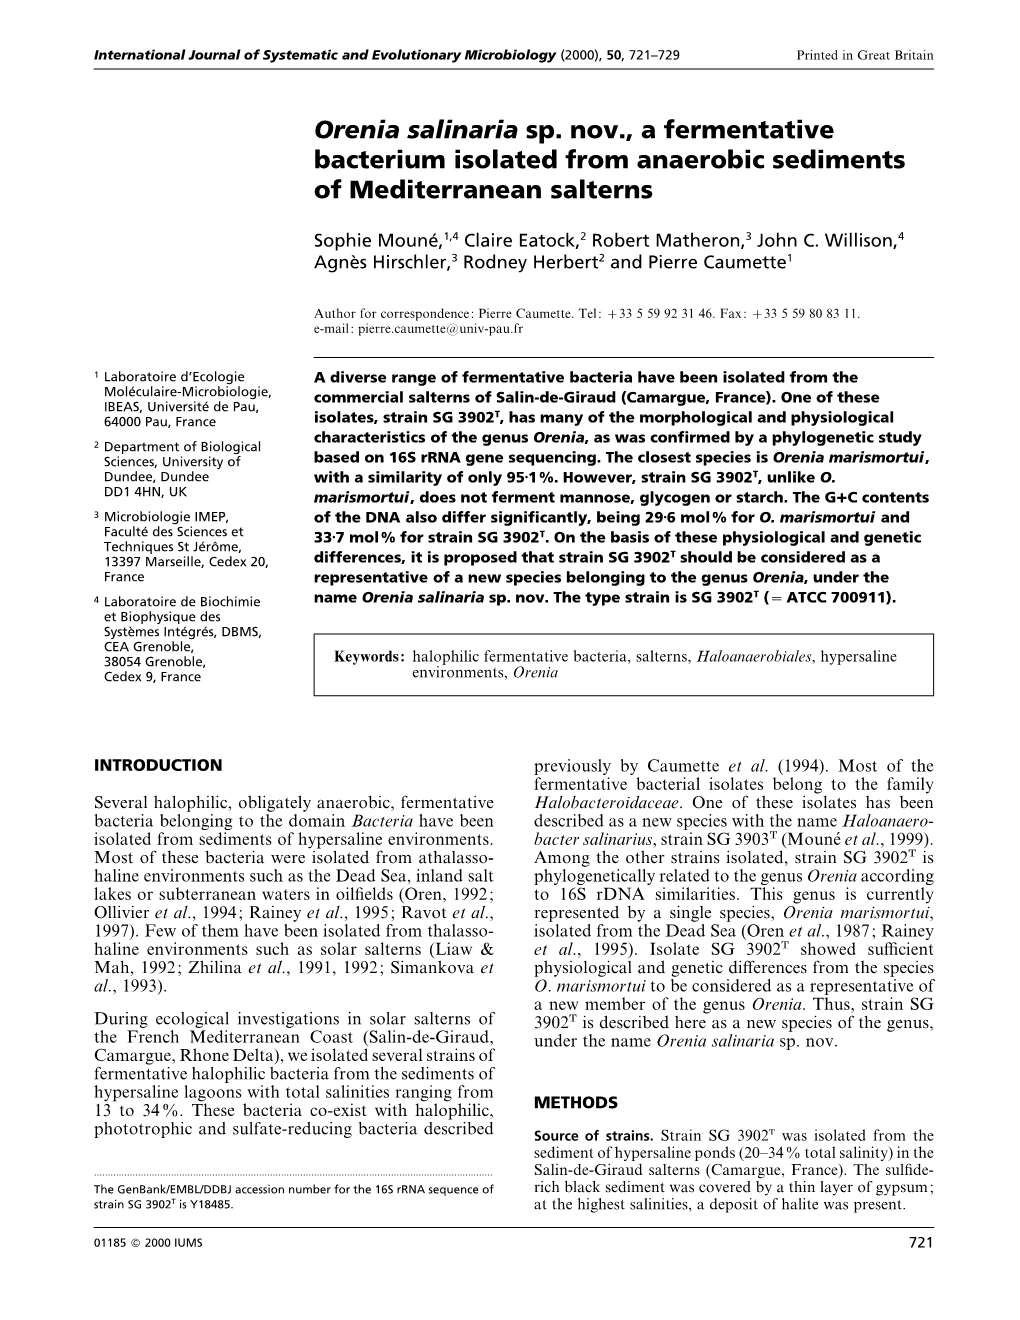 Orenia Salinaria Sp. Nov., a Fermentative Bacterium Isolated from Anaerobic Sediments of Mediterranean Salterns